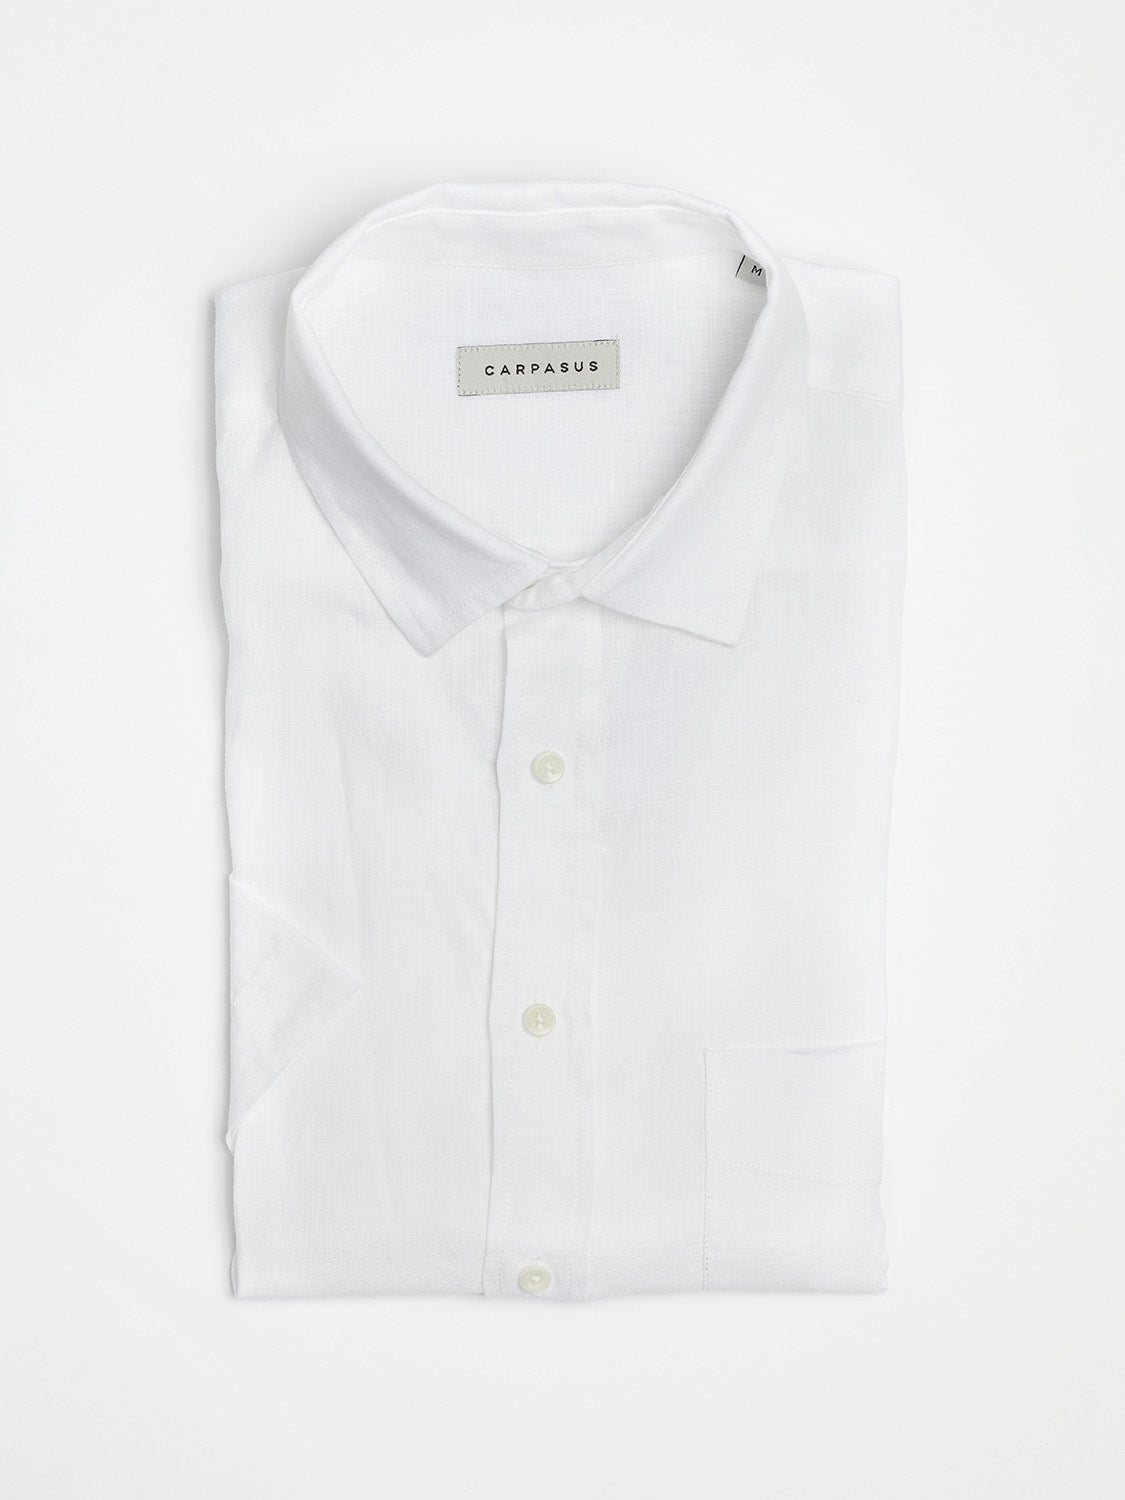 Store CARPASUS - Online Linen White Sleeve Shirt Sustainable Short Lido